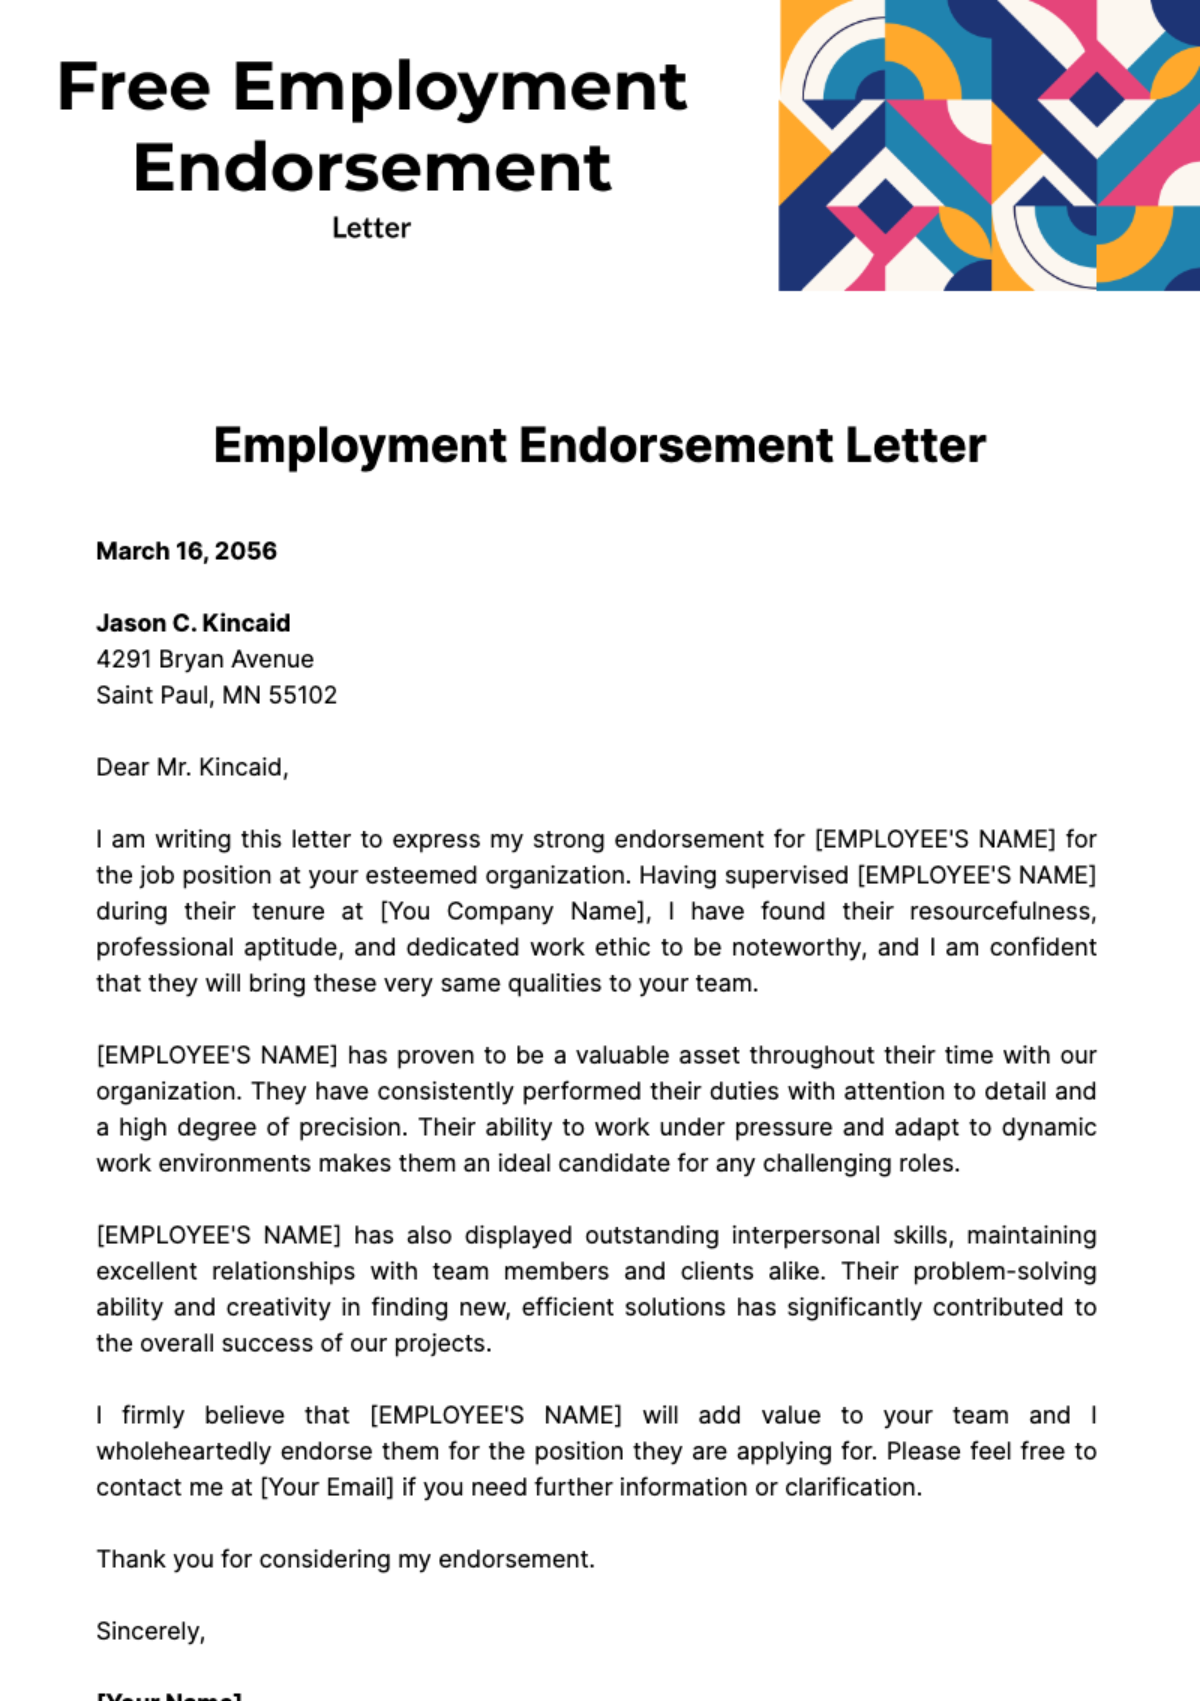 Free Employment Endorsement Letter Template